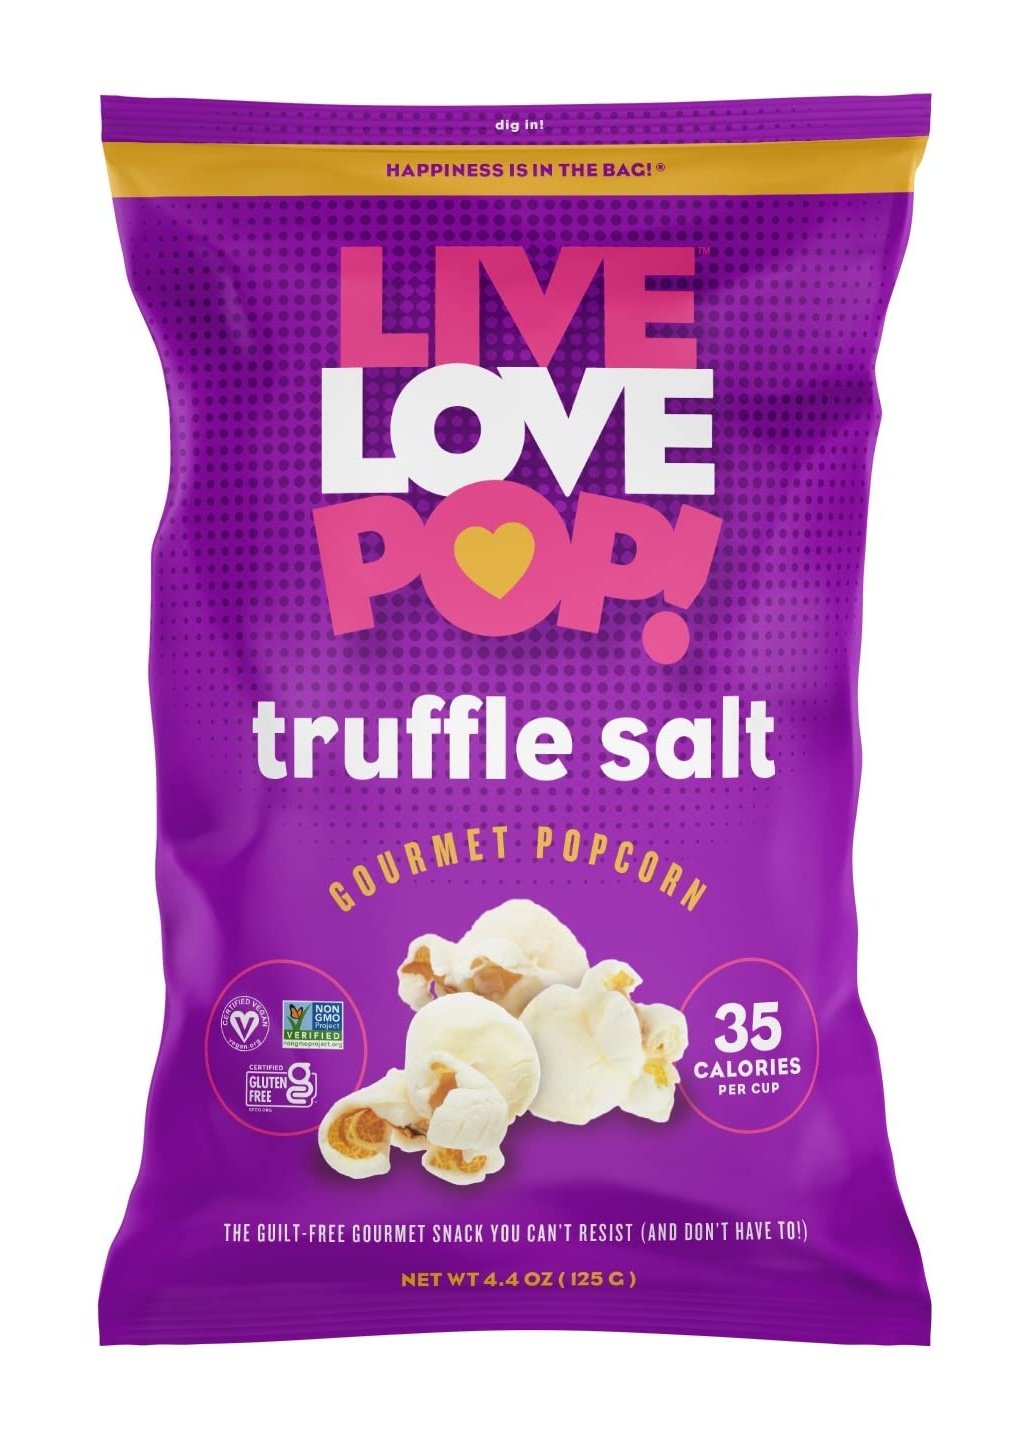 LIVE LOVE POP Truffle Salt Popcorn